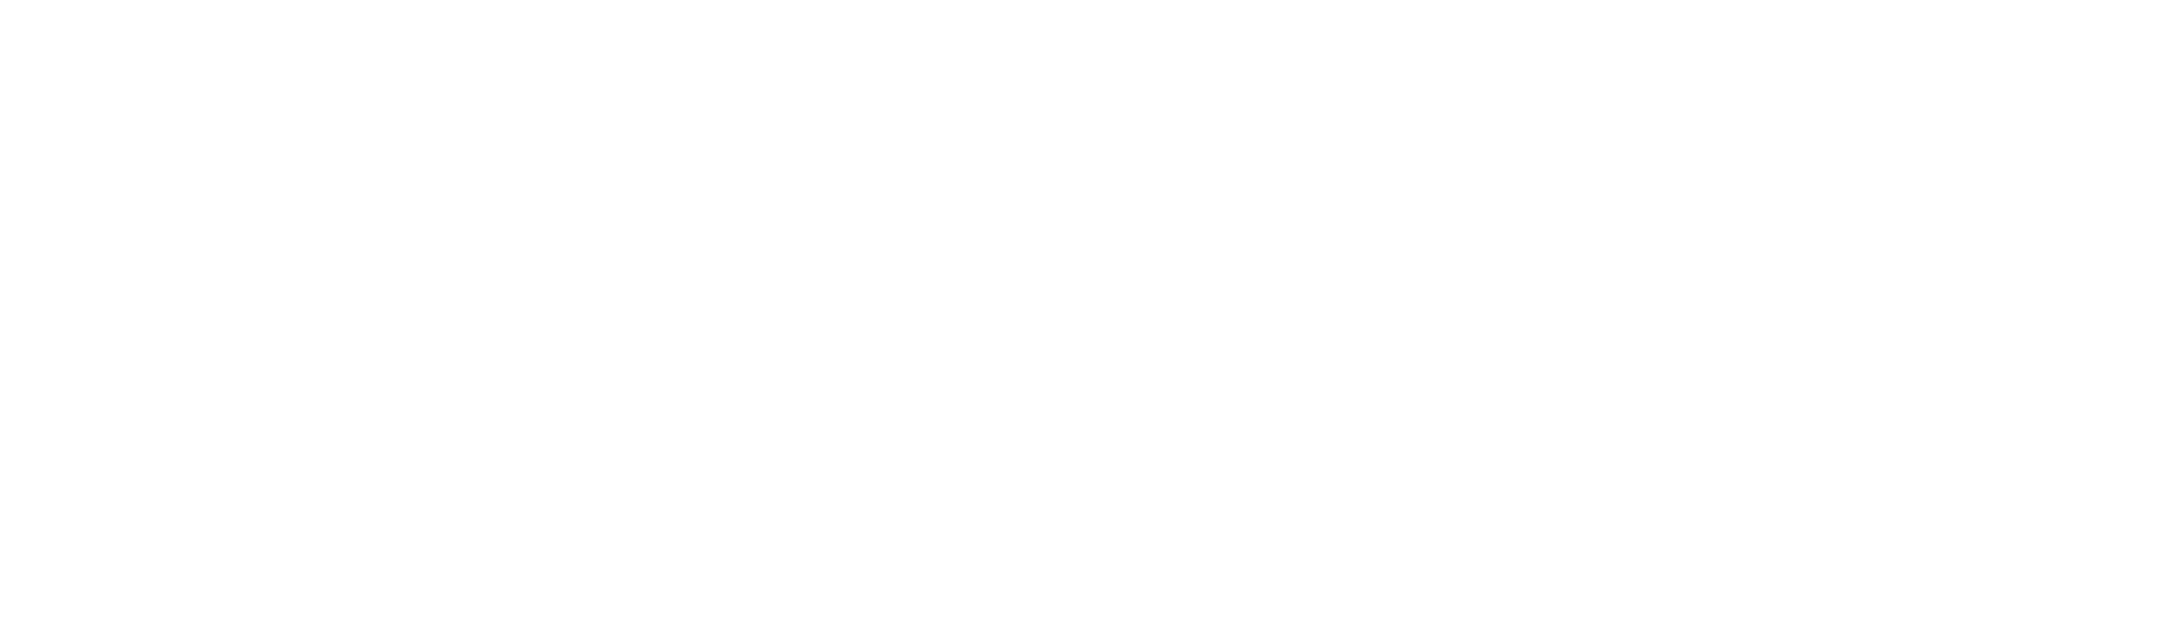 K2 News